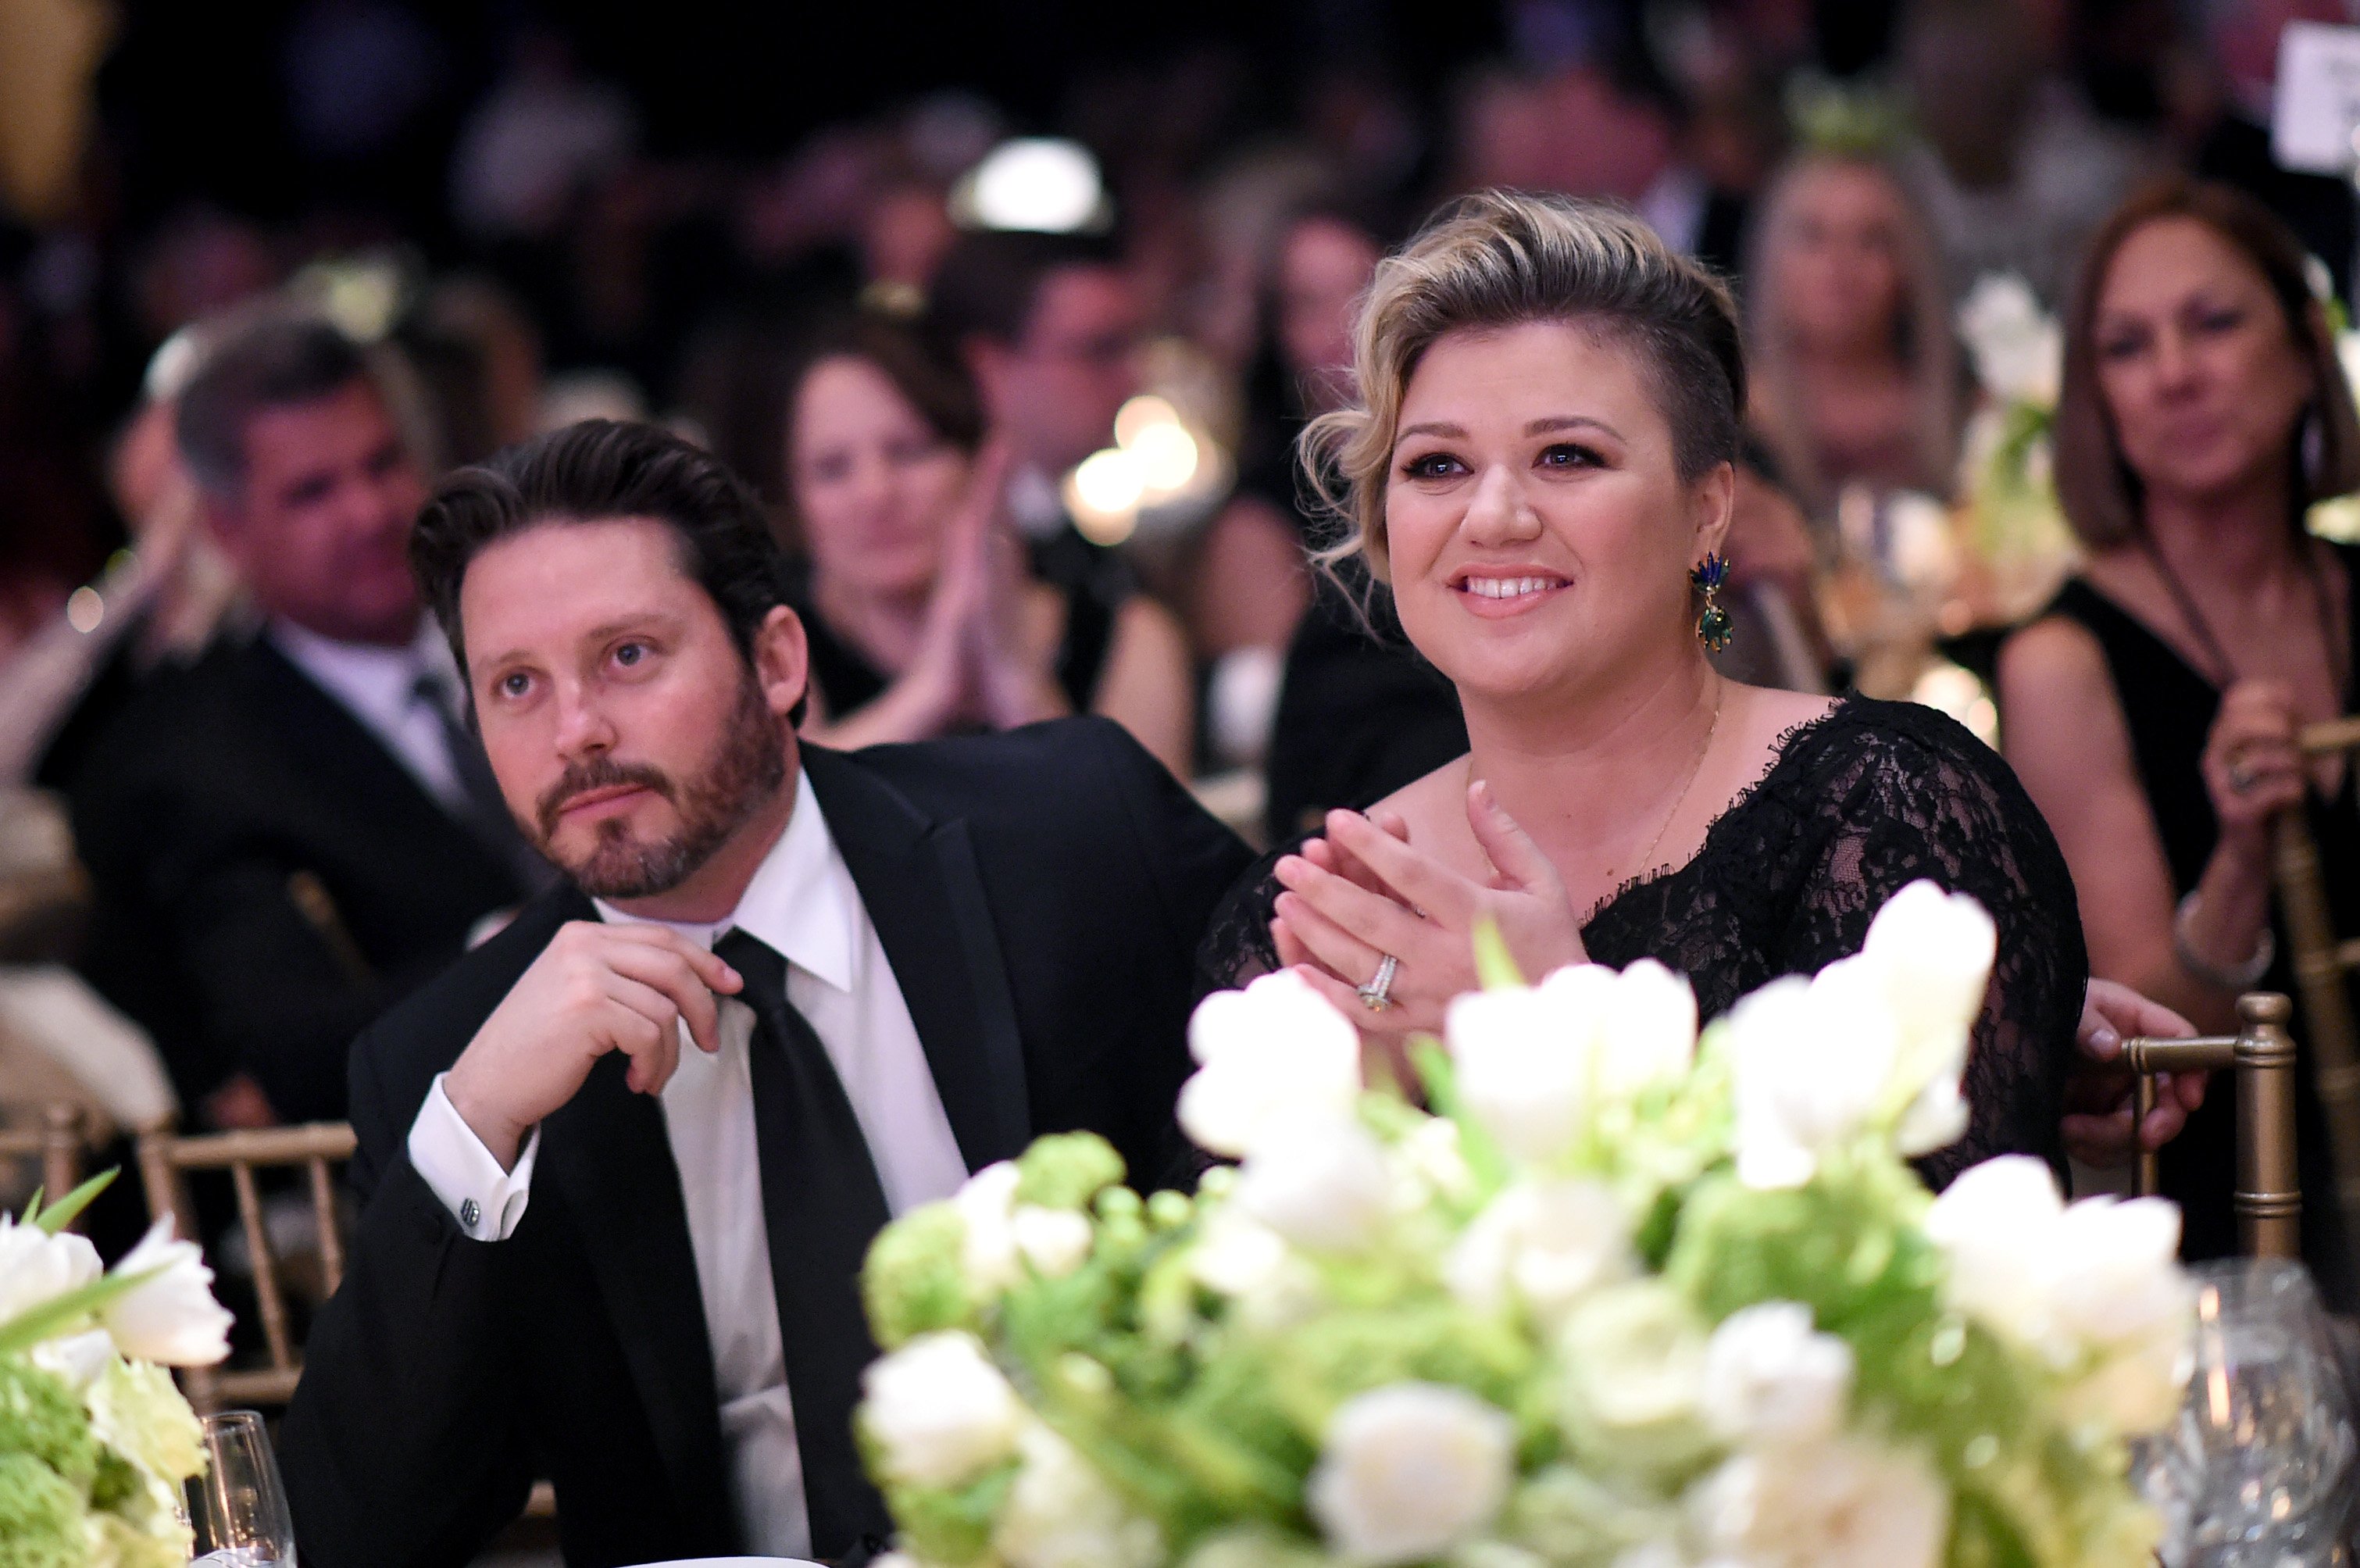 Kelly Clarkson (right) and her husband Brandon Blackstock